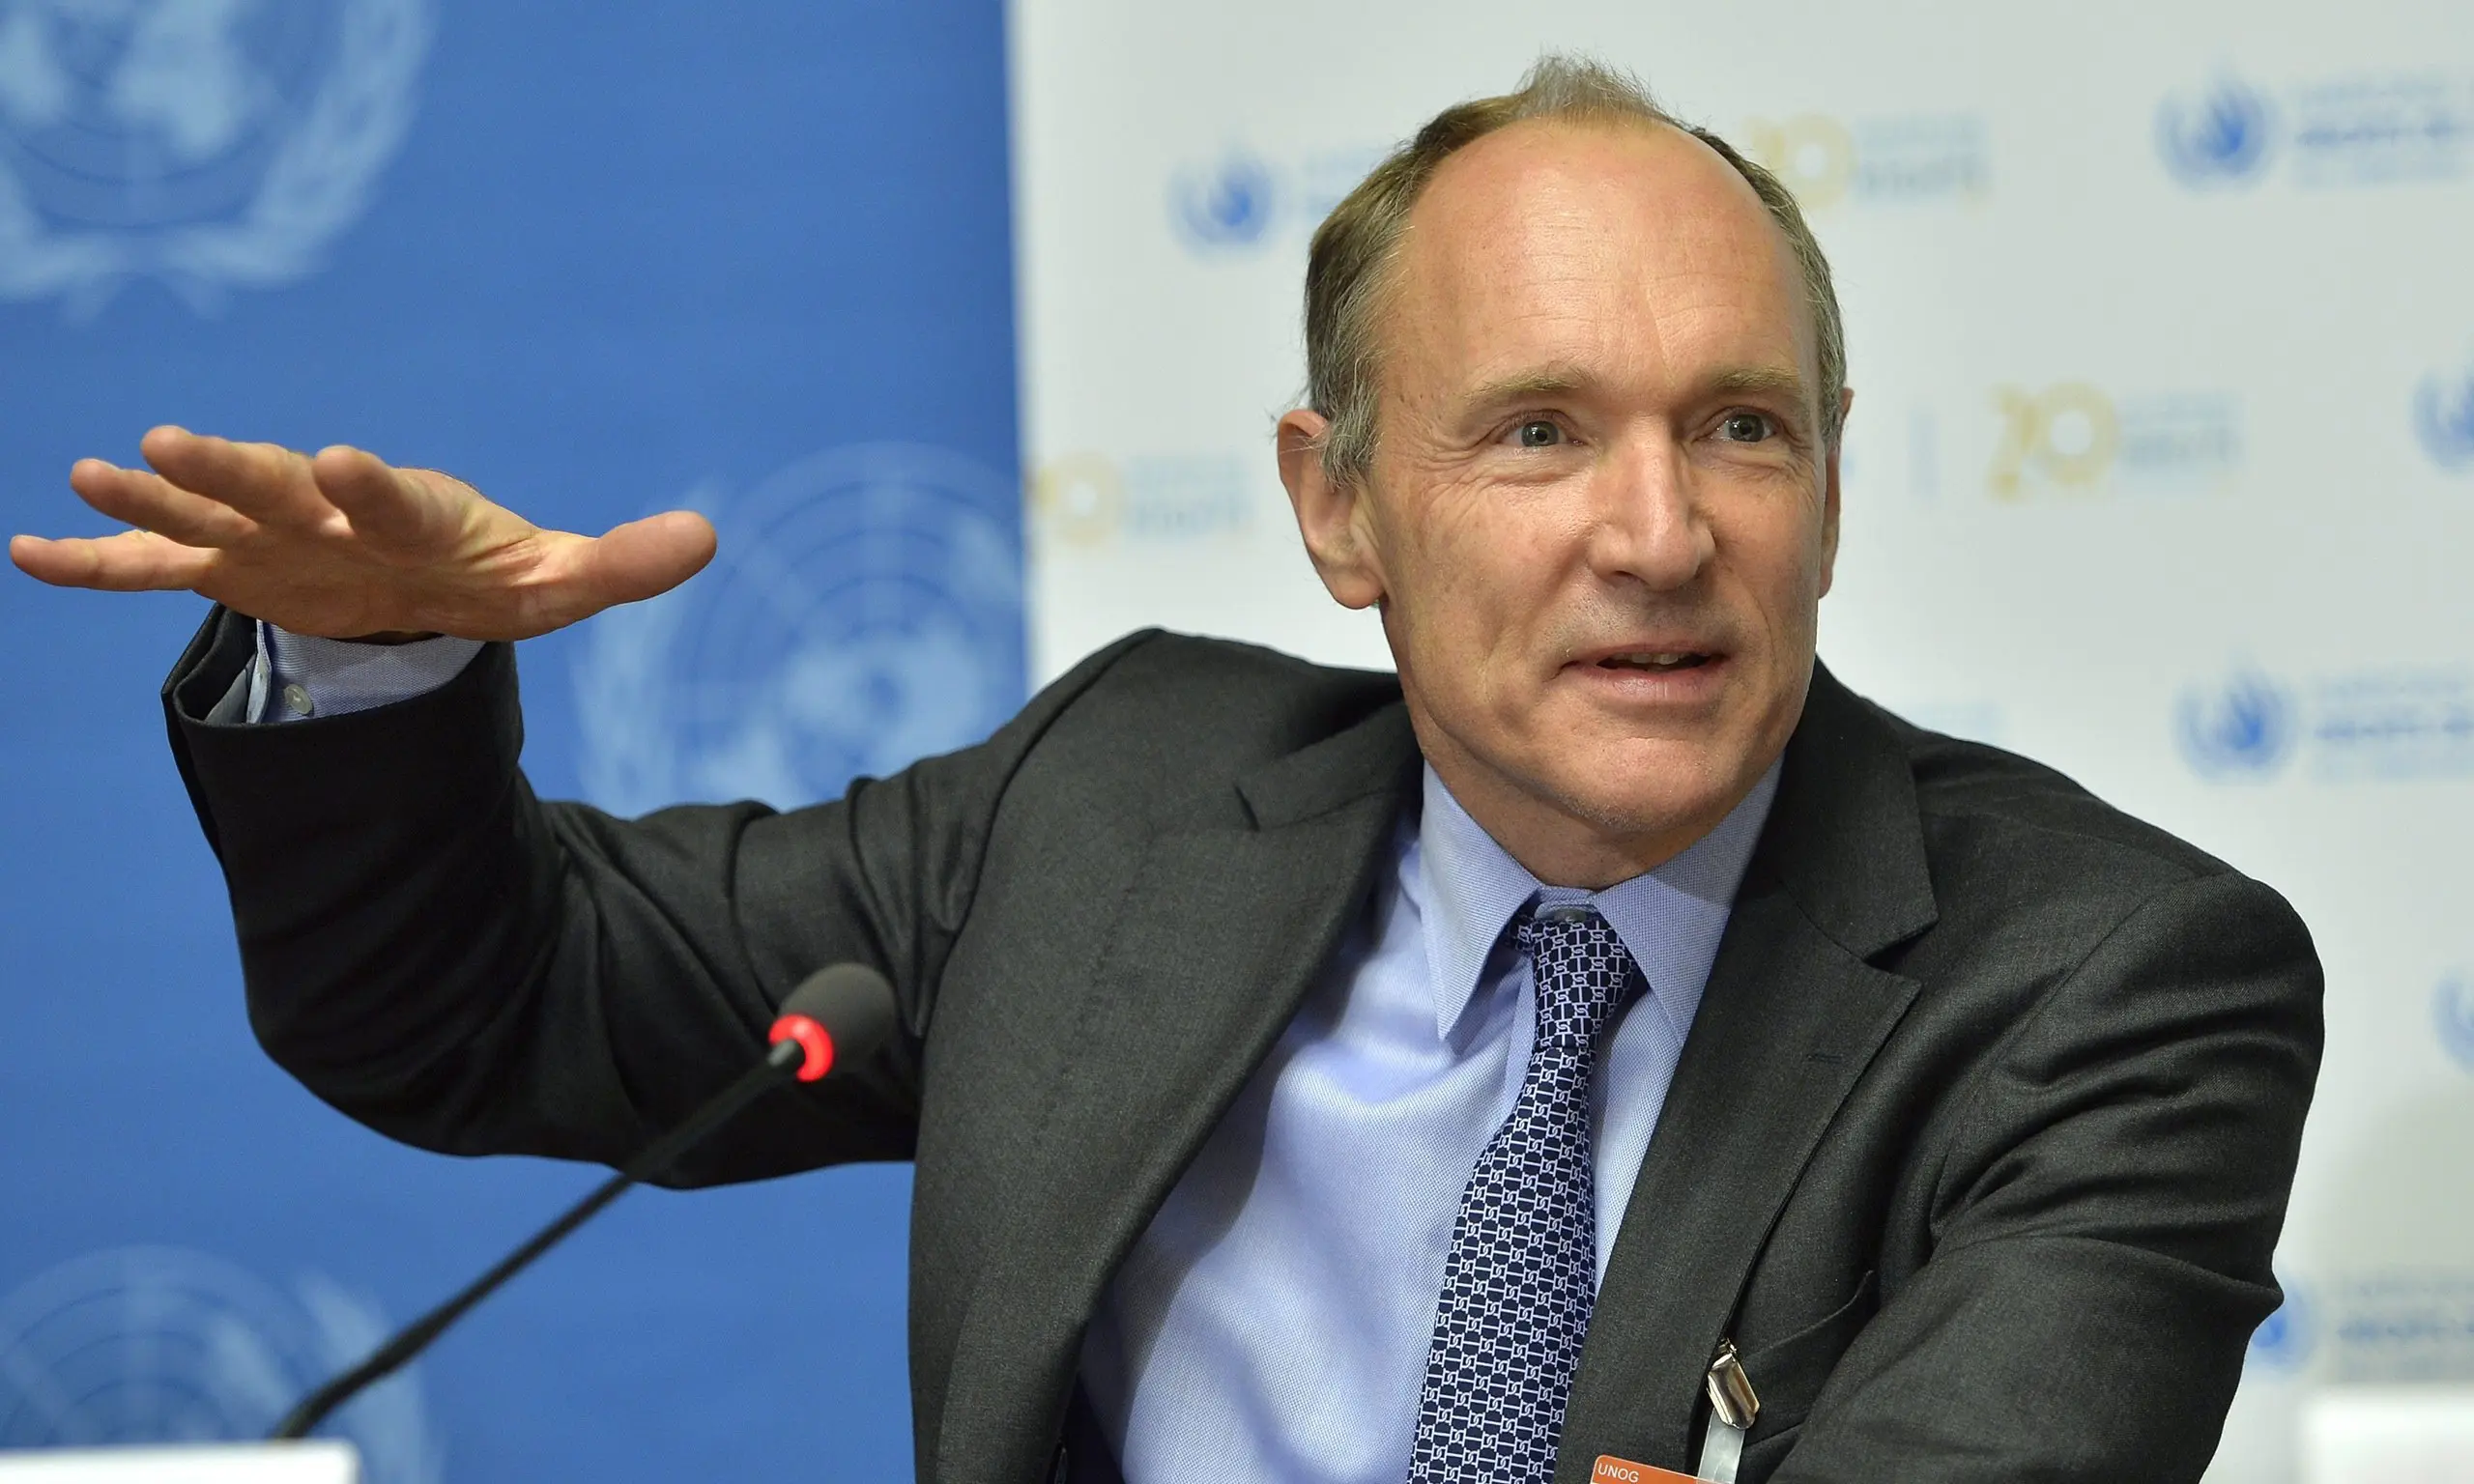 Tim Berners-Lee (theguardian.com)